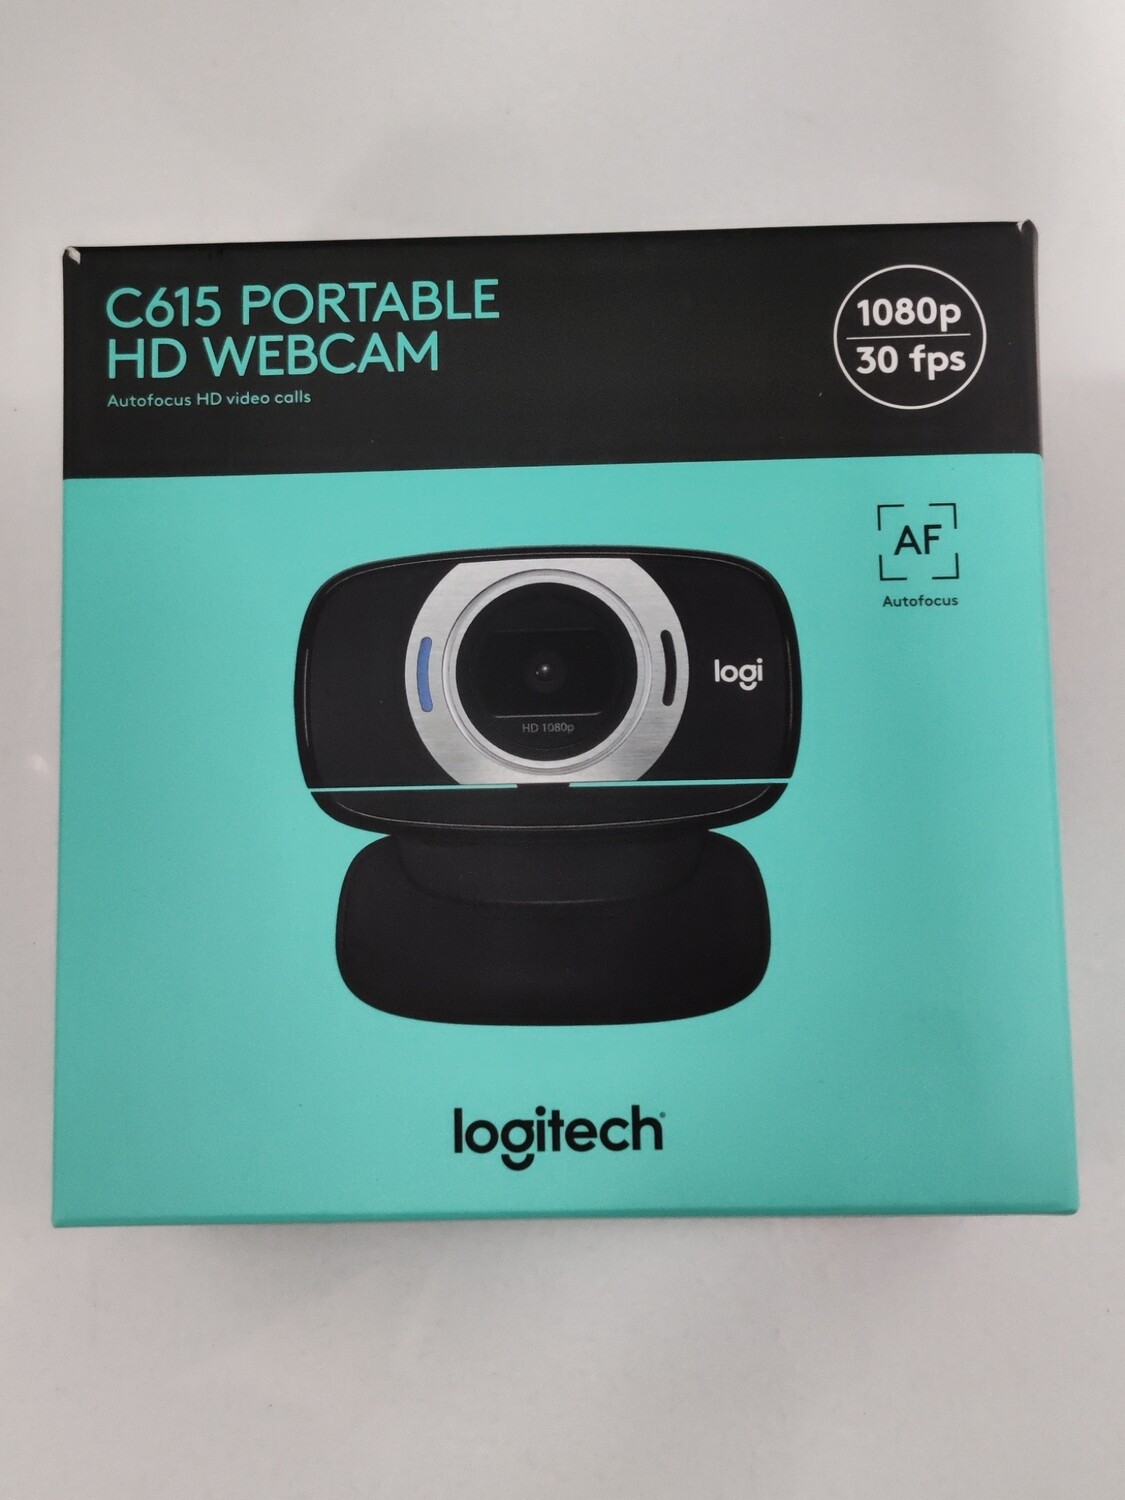 C615 HD Webcam - Rs.3750